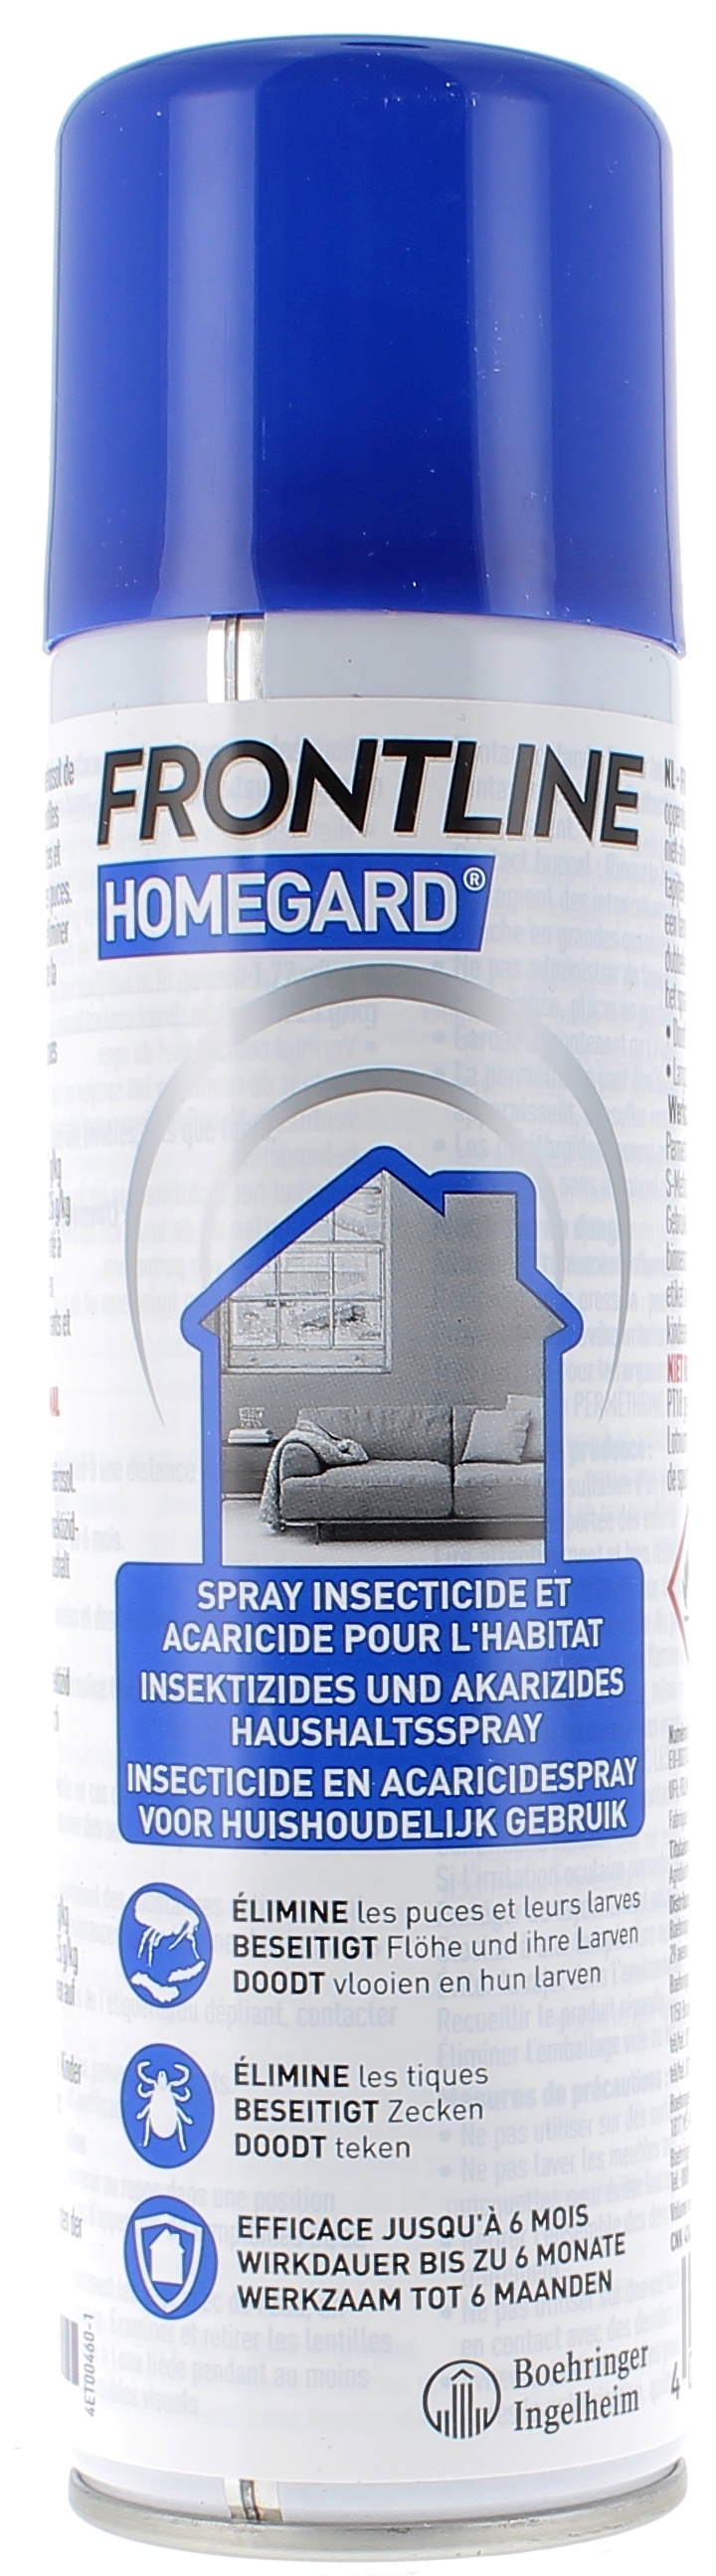 Homegard Spray insecticide et acaricide habitat Frontline